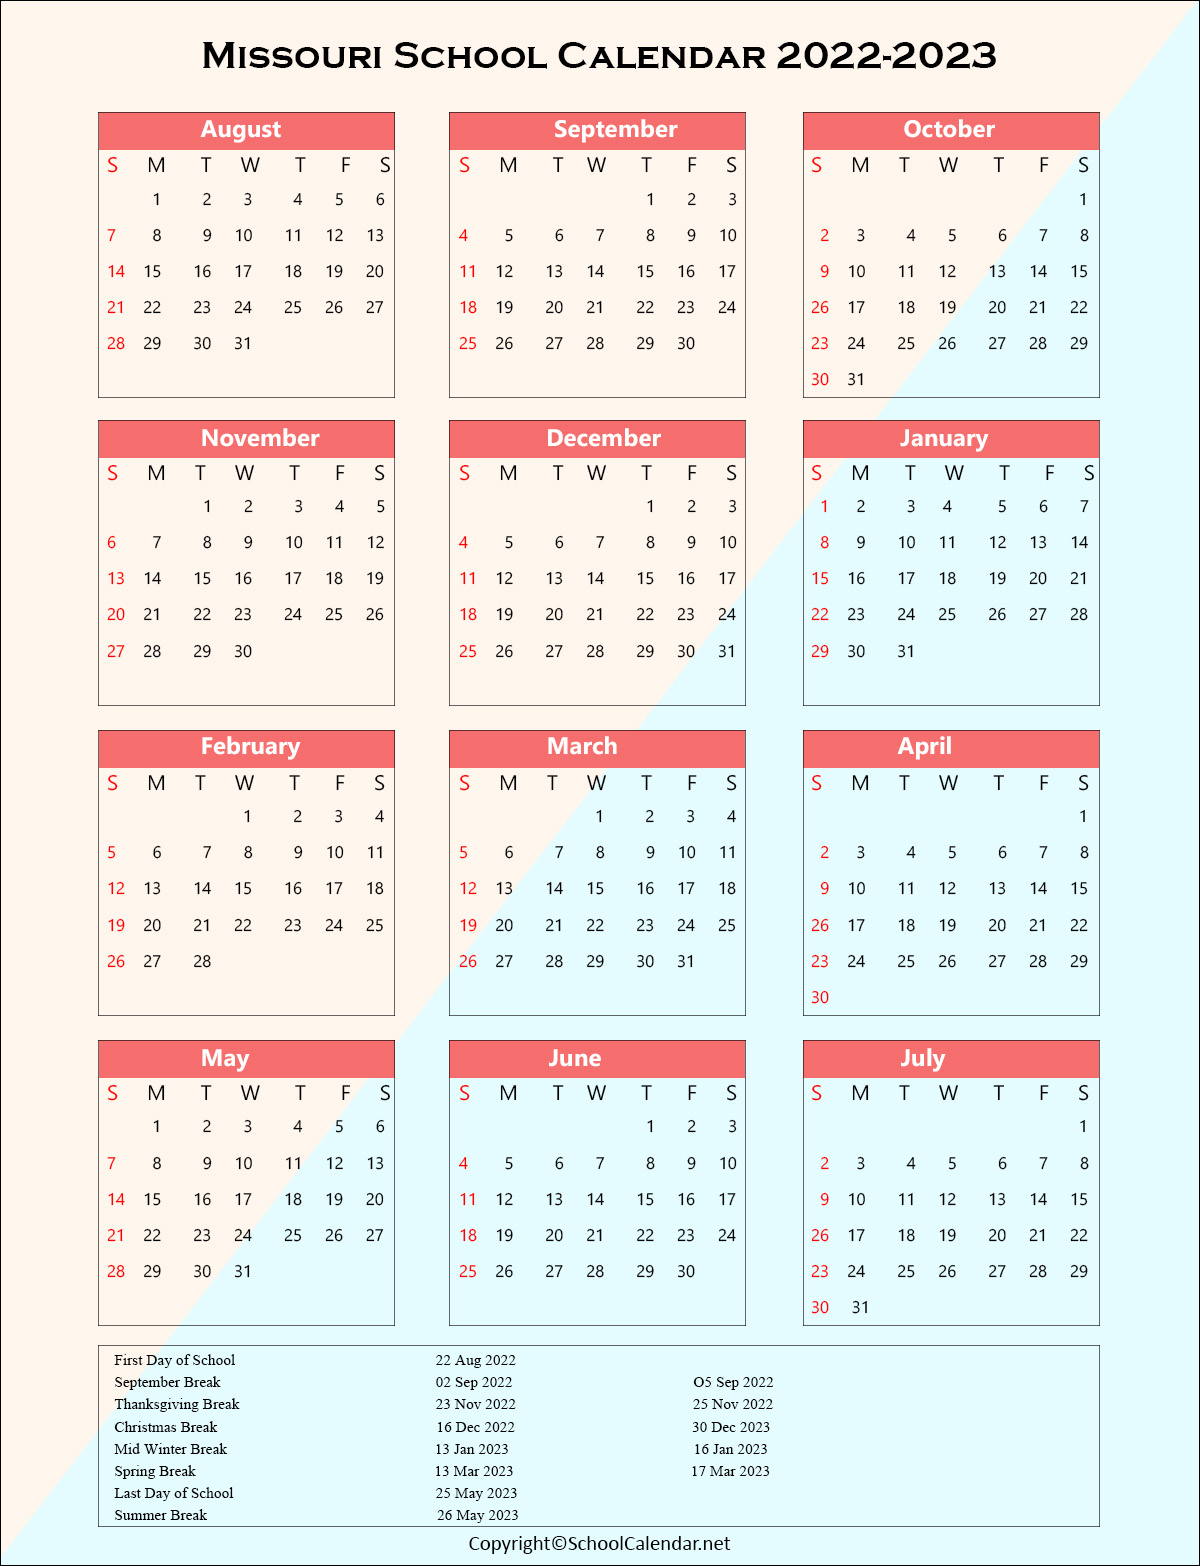 Missouri School Holiday Calendar 2022